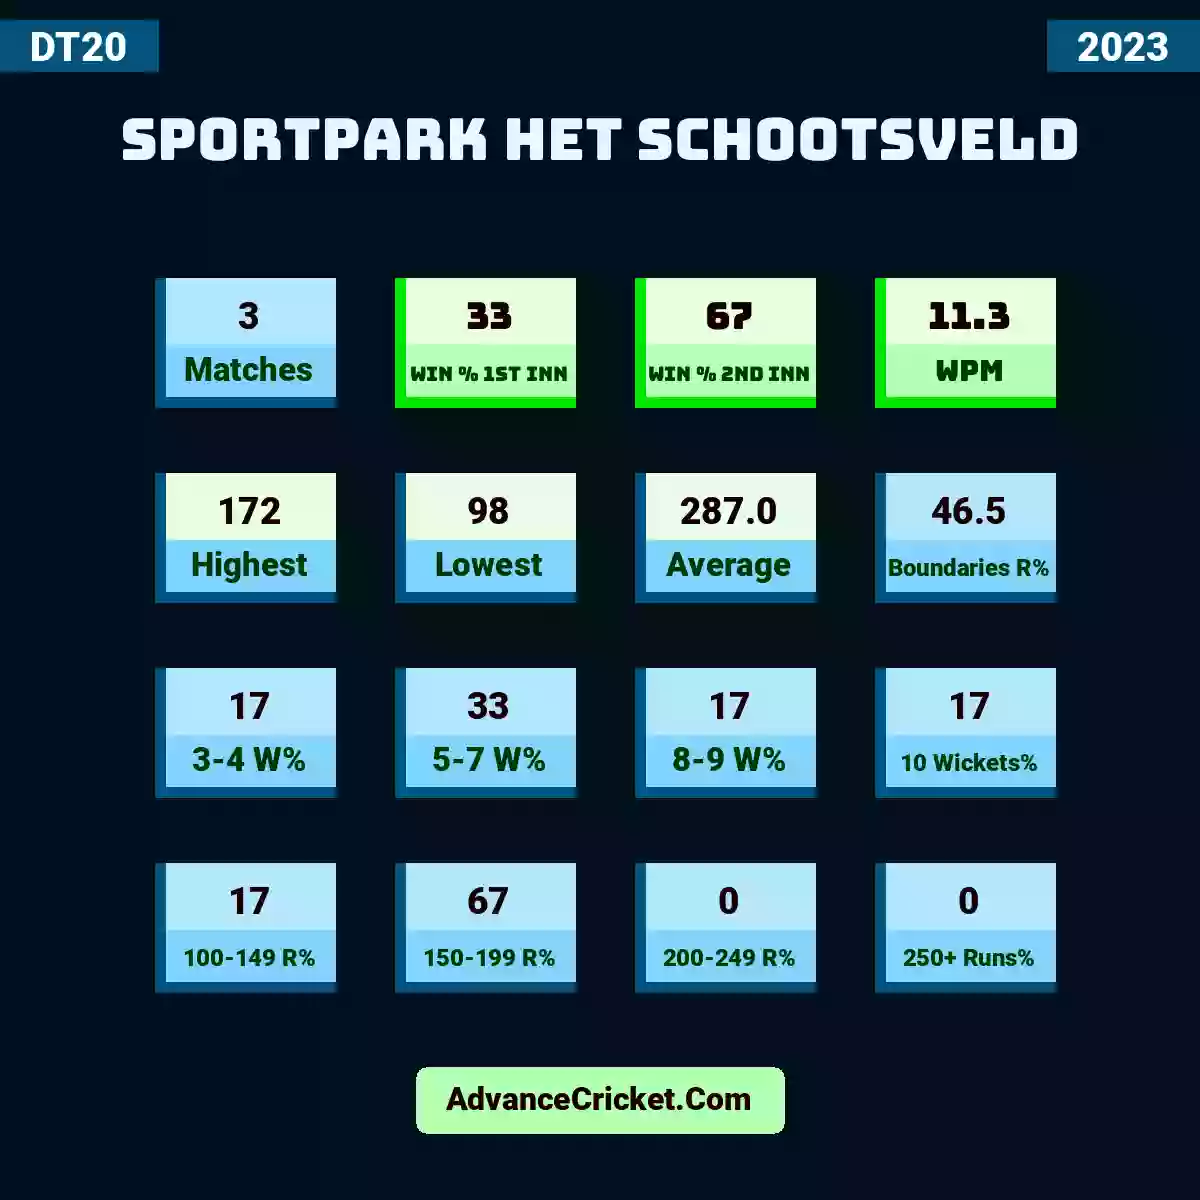 Image showing Sportpark Het Schootsveld with Matches: 3, Win % 1st Inn: 33, Win % 2nd Inn: 67, WPM: 11.3, Highest: 172, Lowest: 98, Average: 287.0, Boundaries R%: 46.5, 3-4 W%: 17, 5-7 W%: 33, 8-9 W%: 17, 10 Wickets%: 17, 100-149 R%: 17, 150-199 R%: 67, 200-249 R%: 0, 250+ Runs%: 0.